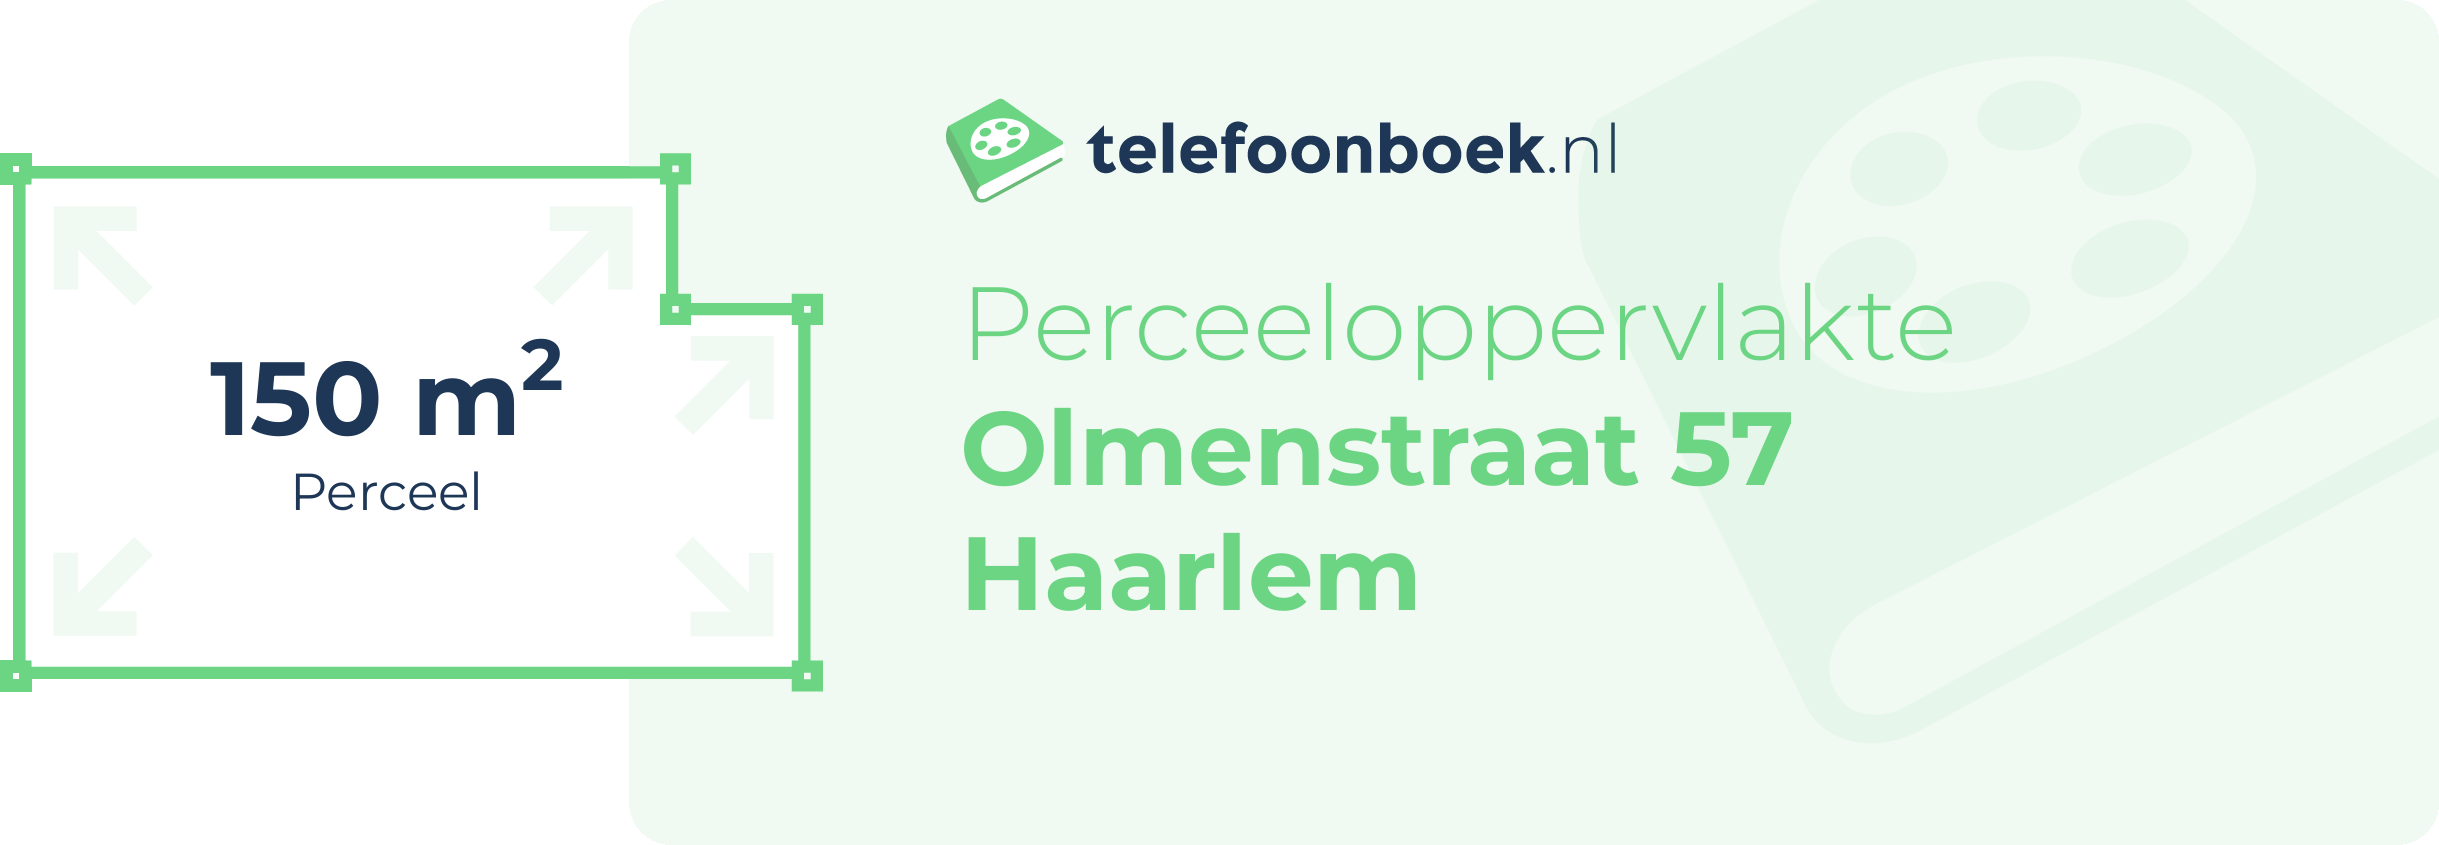 Perceeloppervlakte Olmenstraat 57 Haarlem